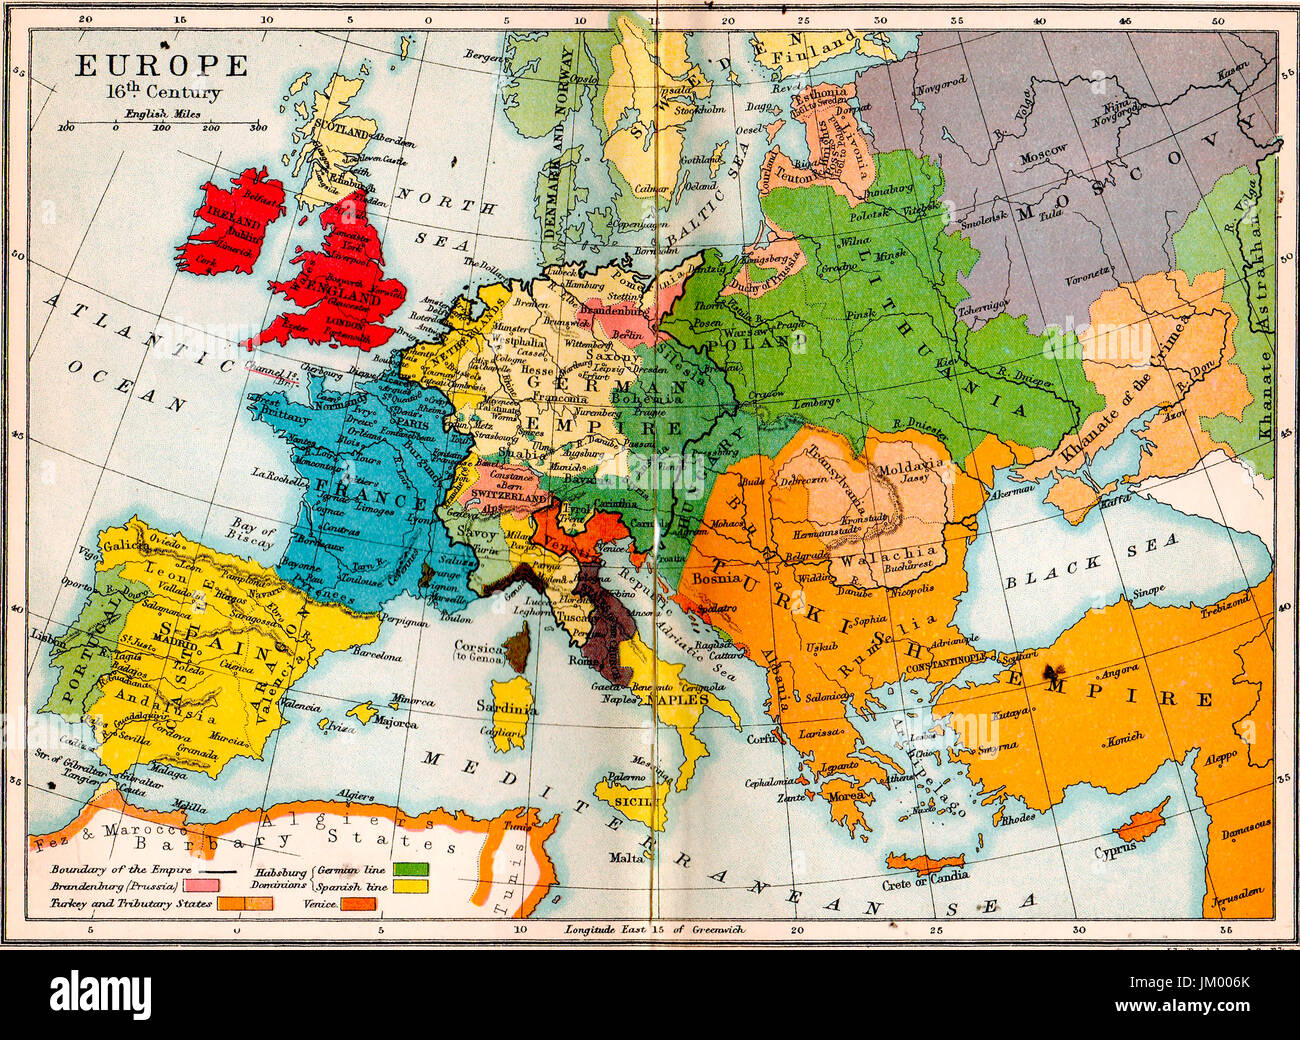 Old school atlas map- Europe in 16th century Stock Photo